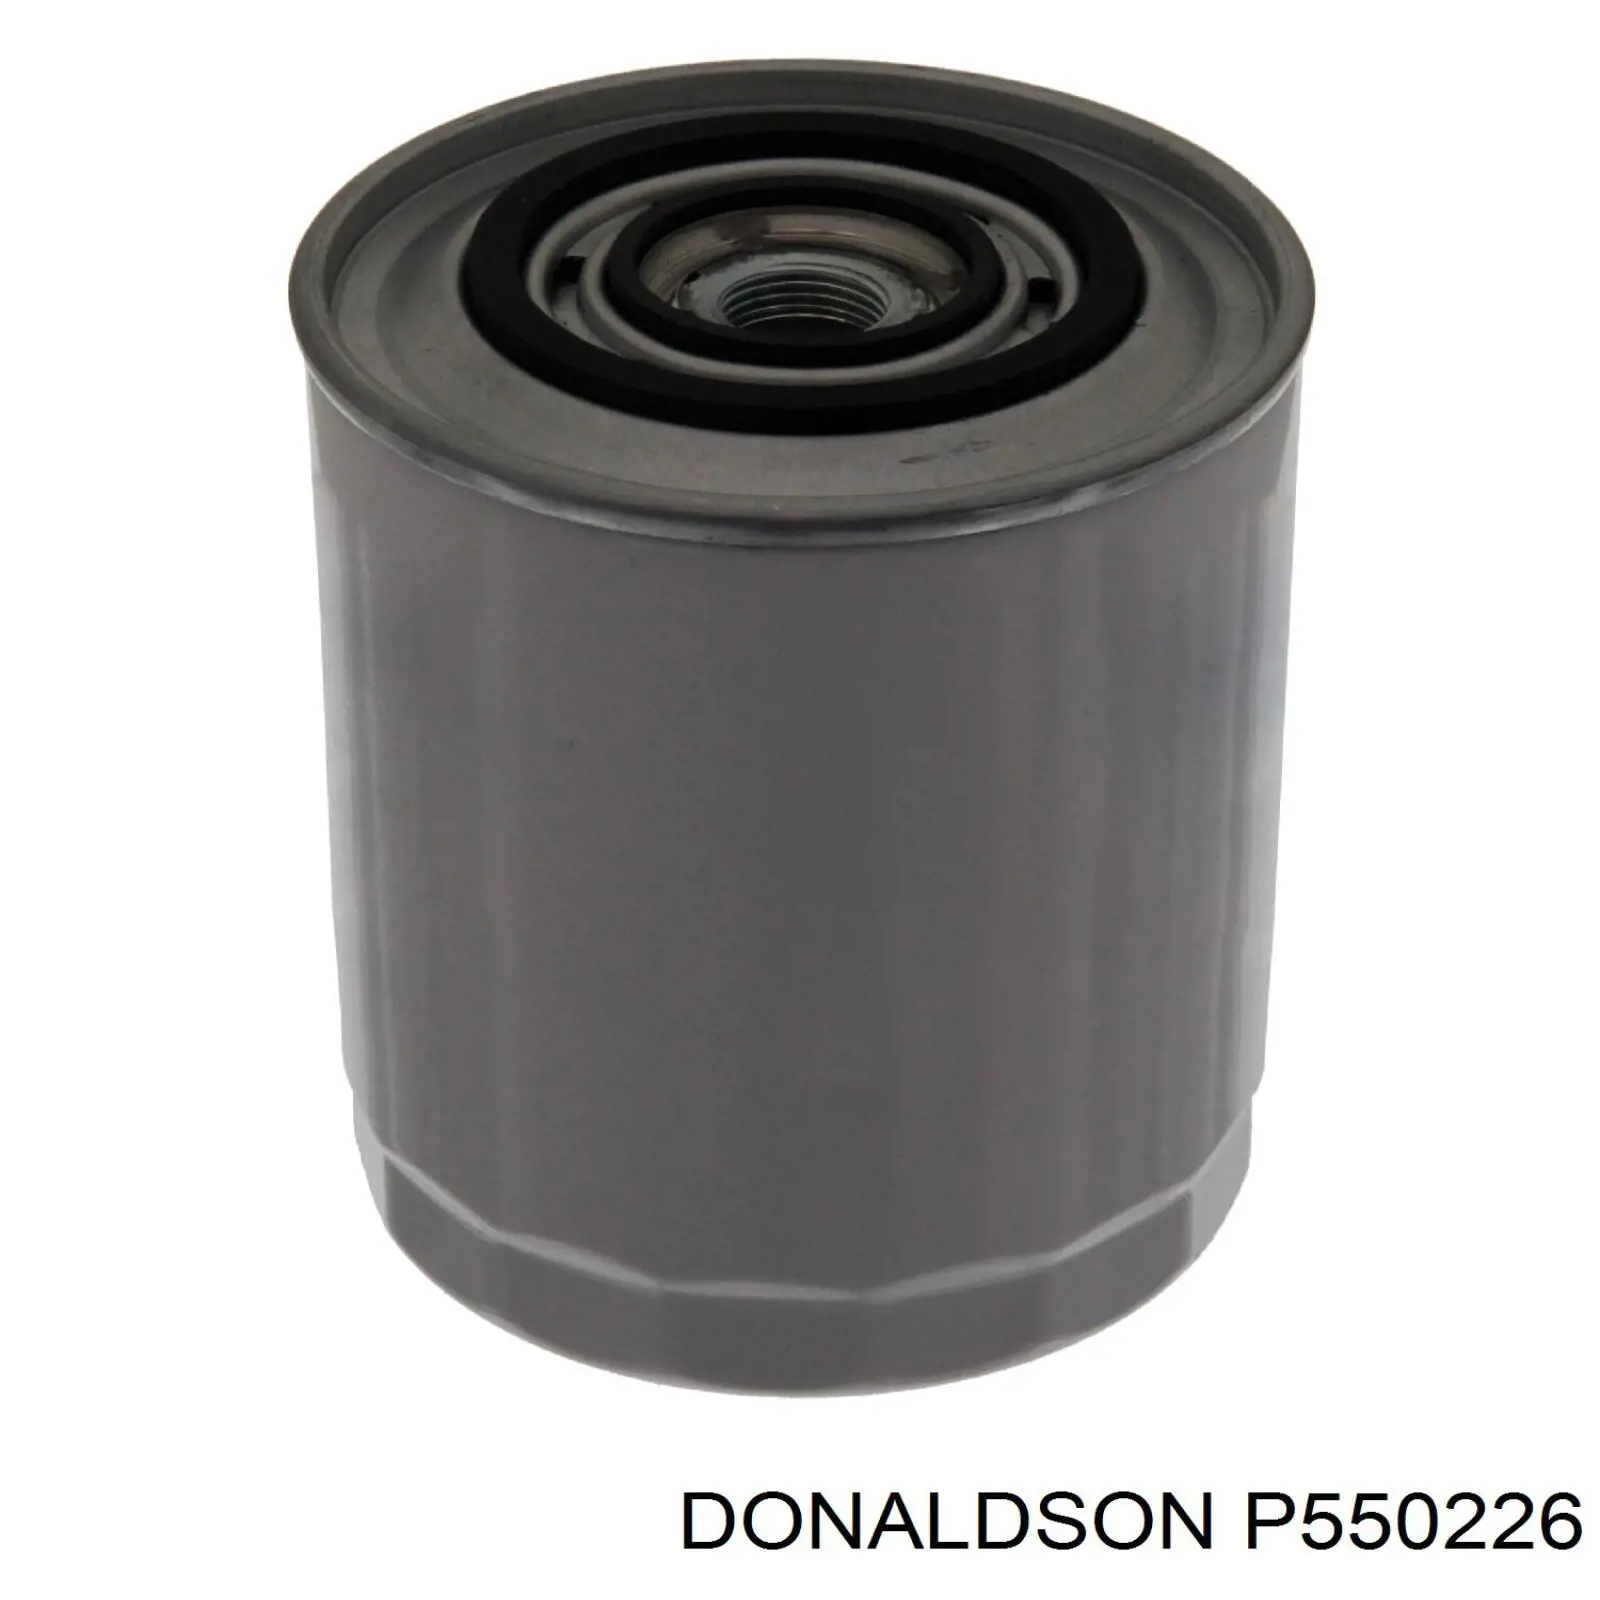 P550226 Donaldson filtro de aceite